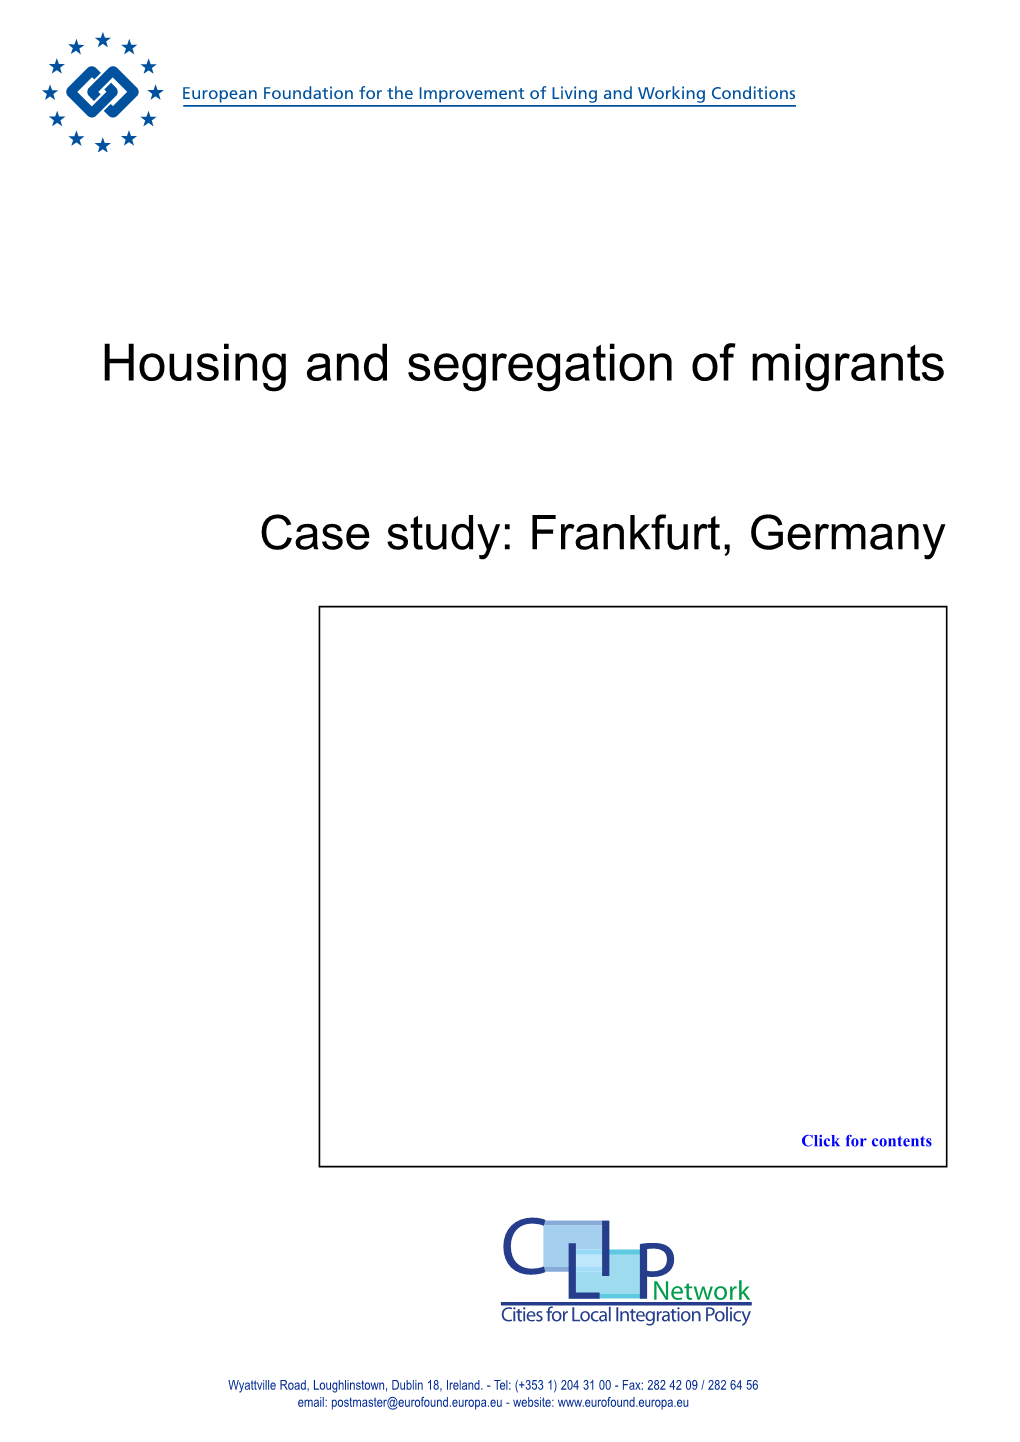 Housing and Segregation of Migrants: Case Study: Frankfurt, Germany